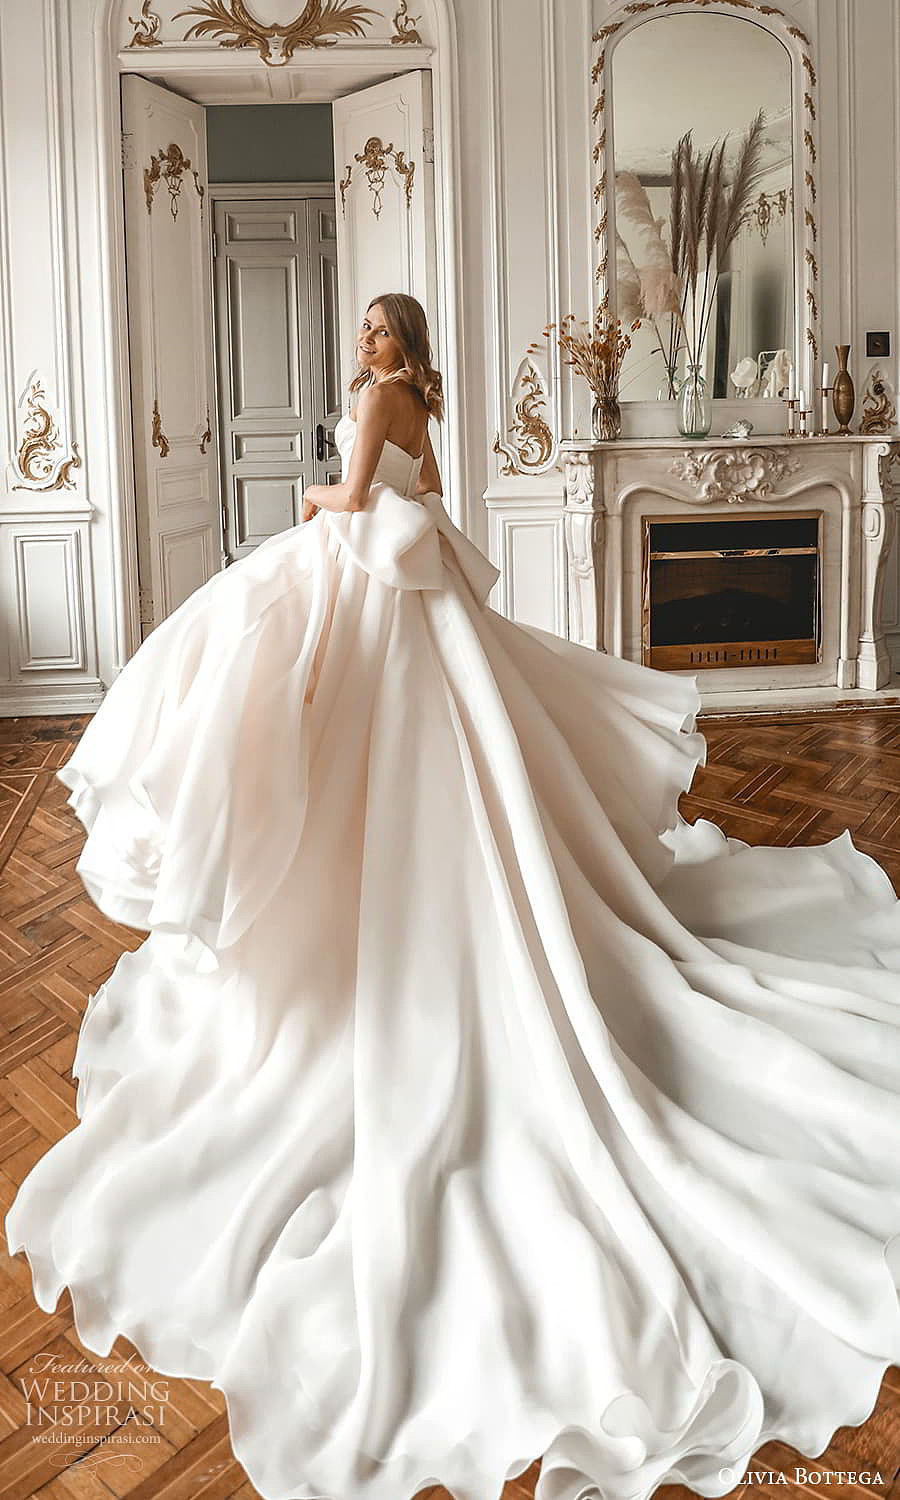 Olivia Bottega Pret-a-Porter 新娘系列 优雅百搭新娘嫁衣 - 2